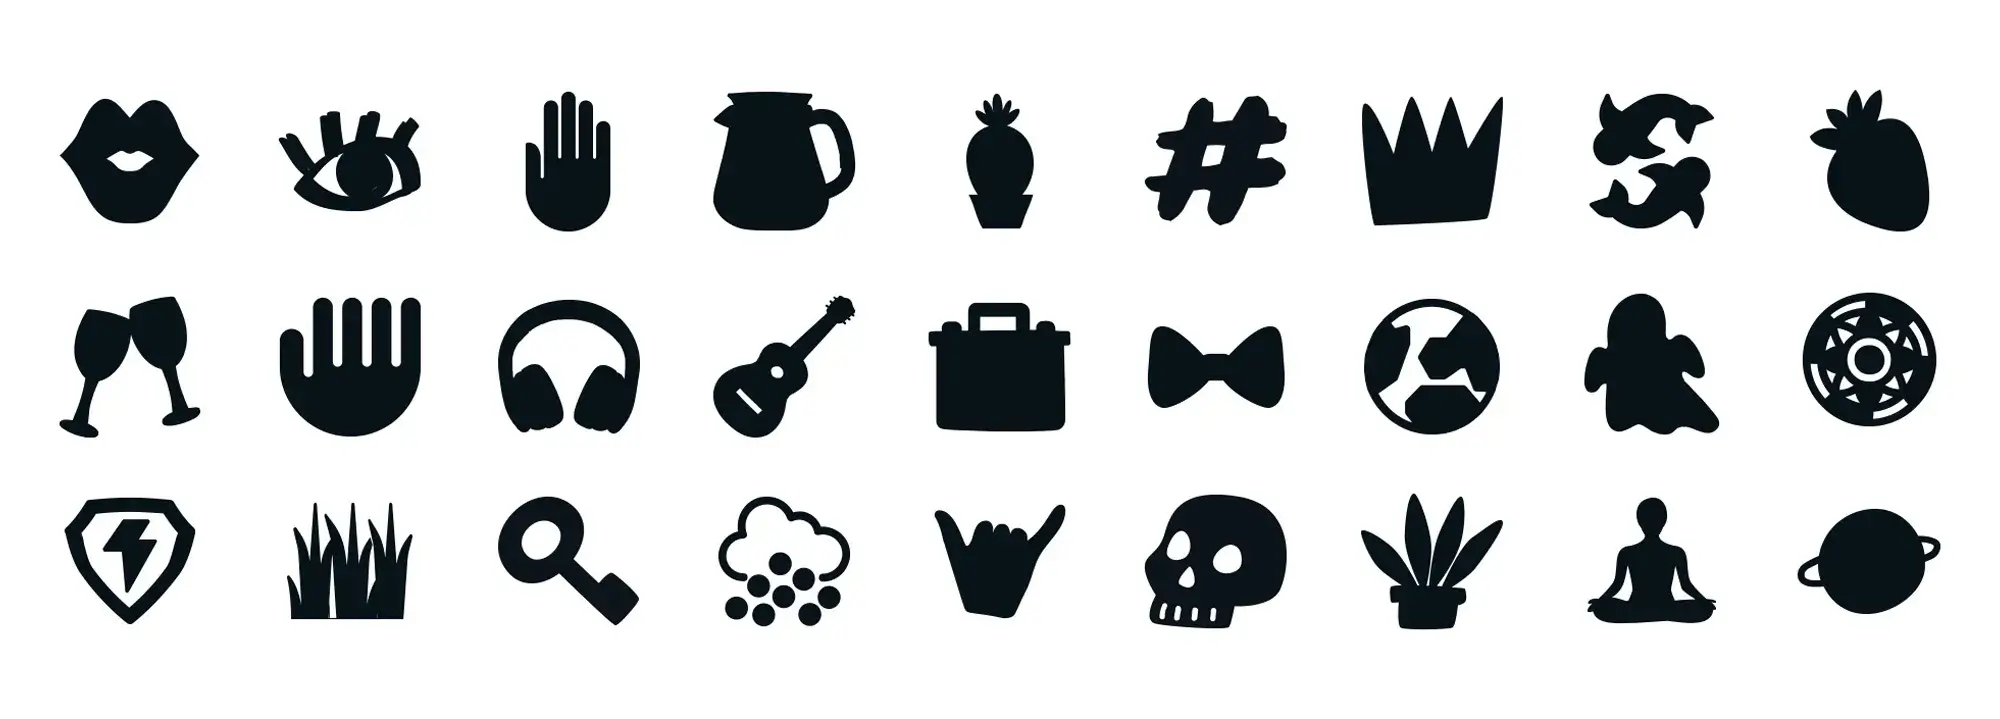 free WordPress icons shapes and masks